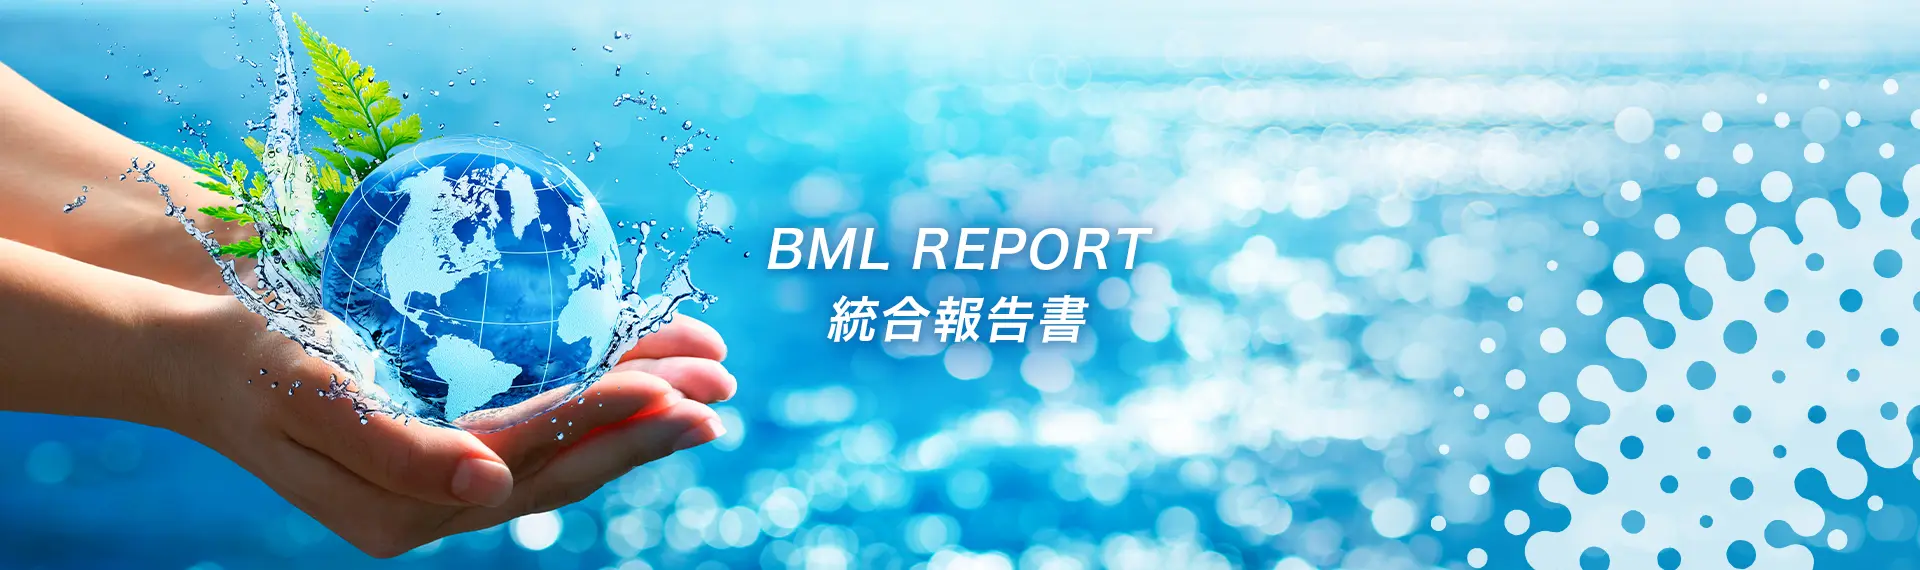 BML REPORT 統合報告書